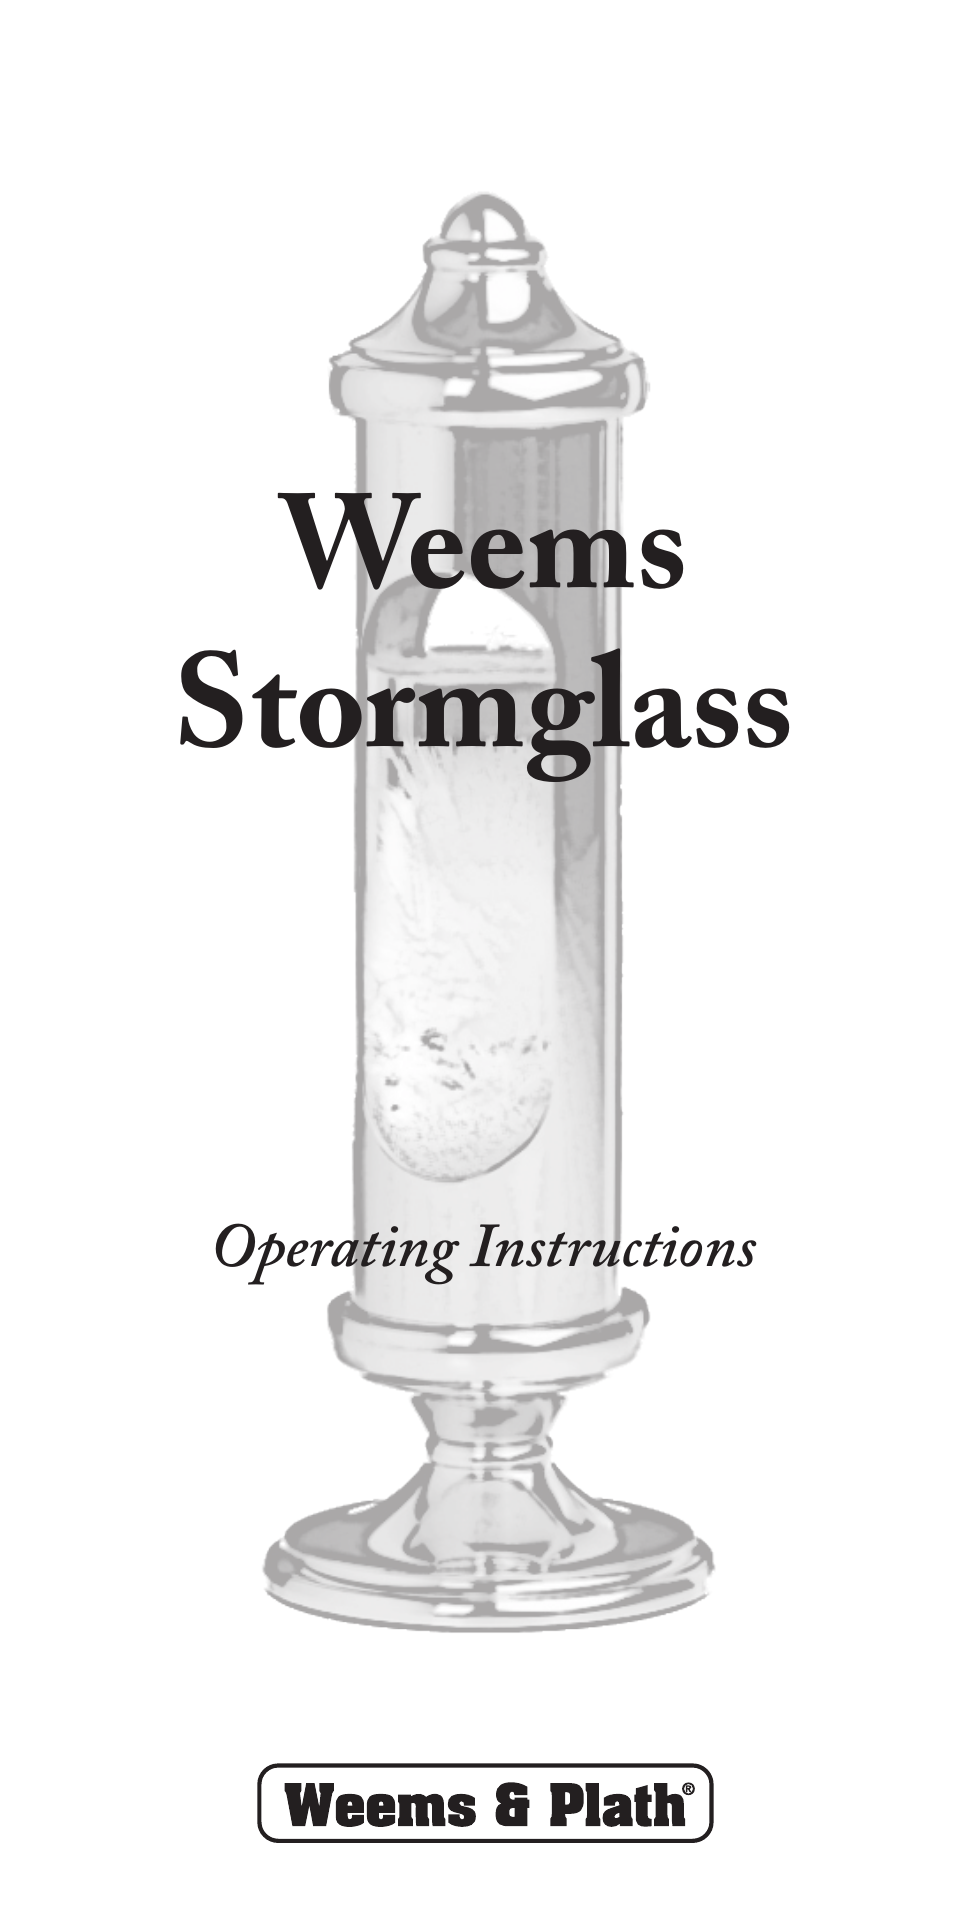 Weems Stormglass (Brass) in Black Gift Box